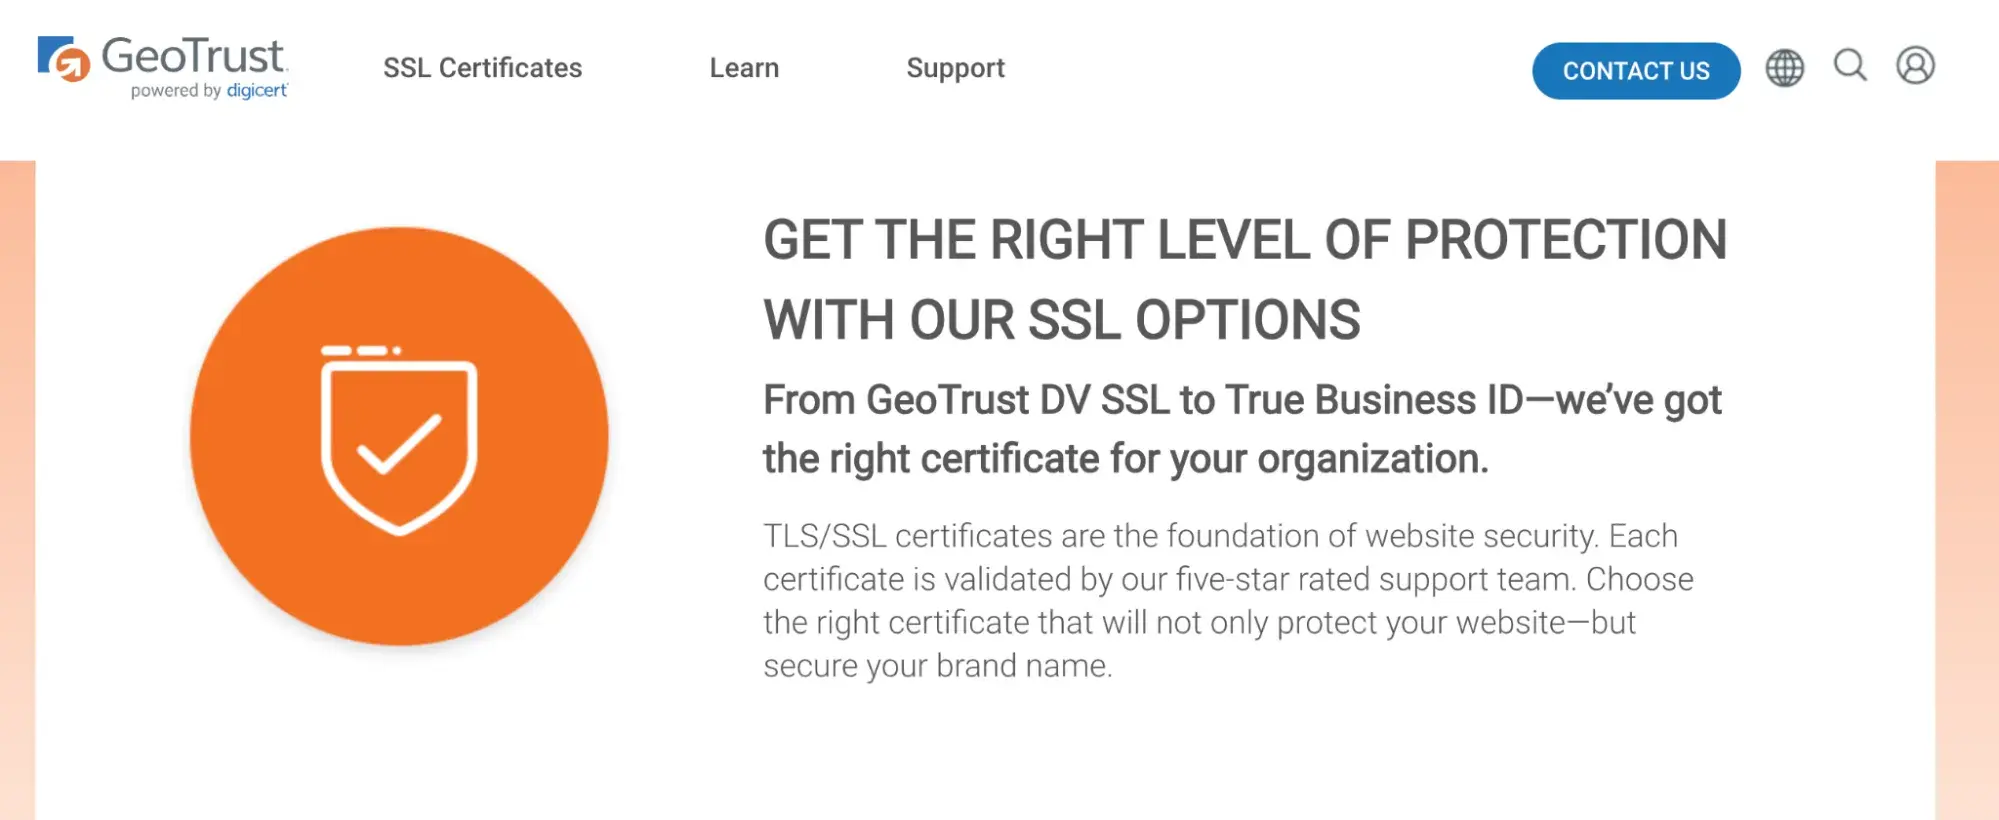 ssl certificate provider, geotrust